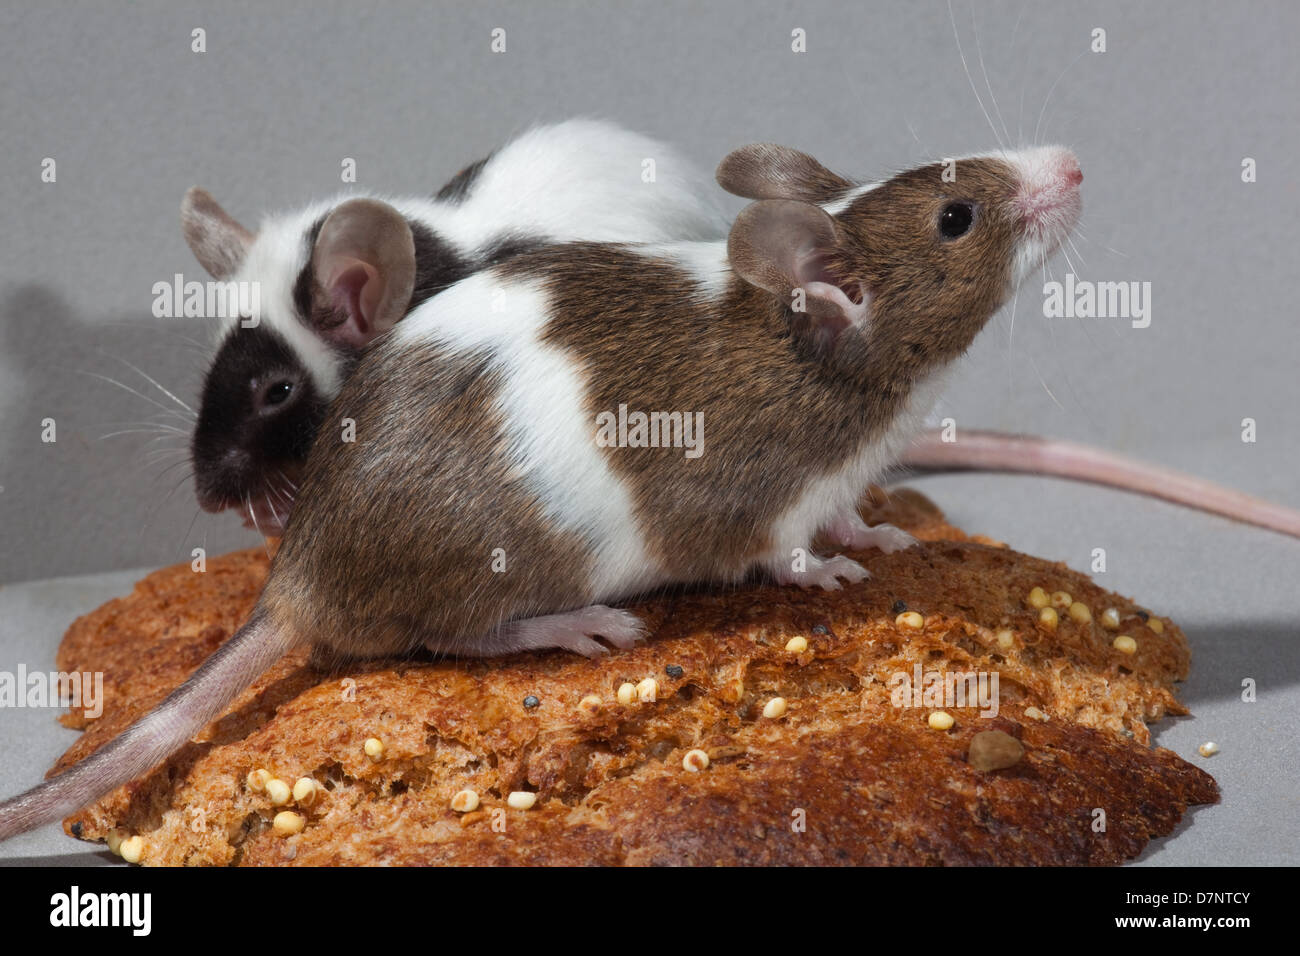 Ratones mascota fotografías e imágenes de alta resolución - Alamy